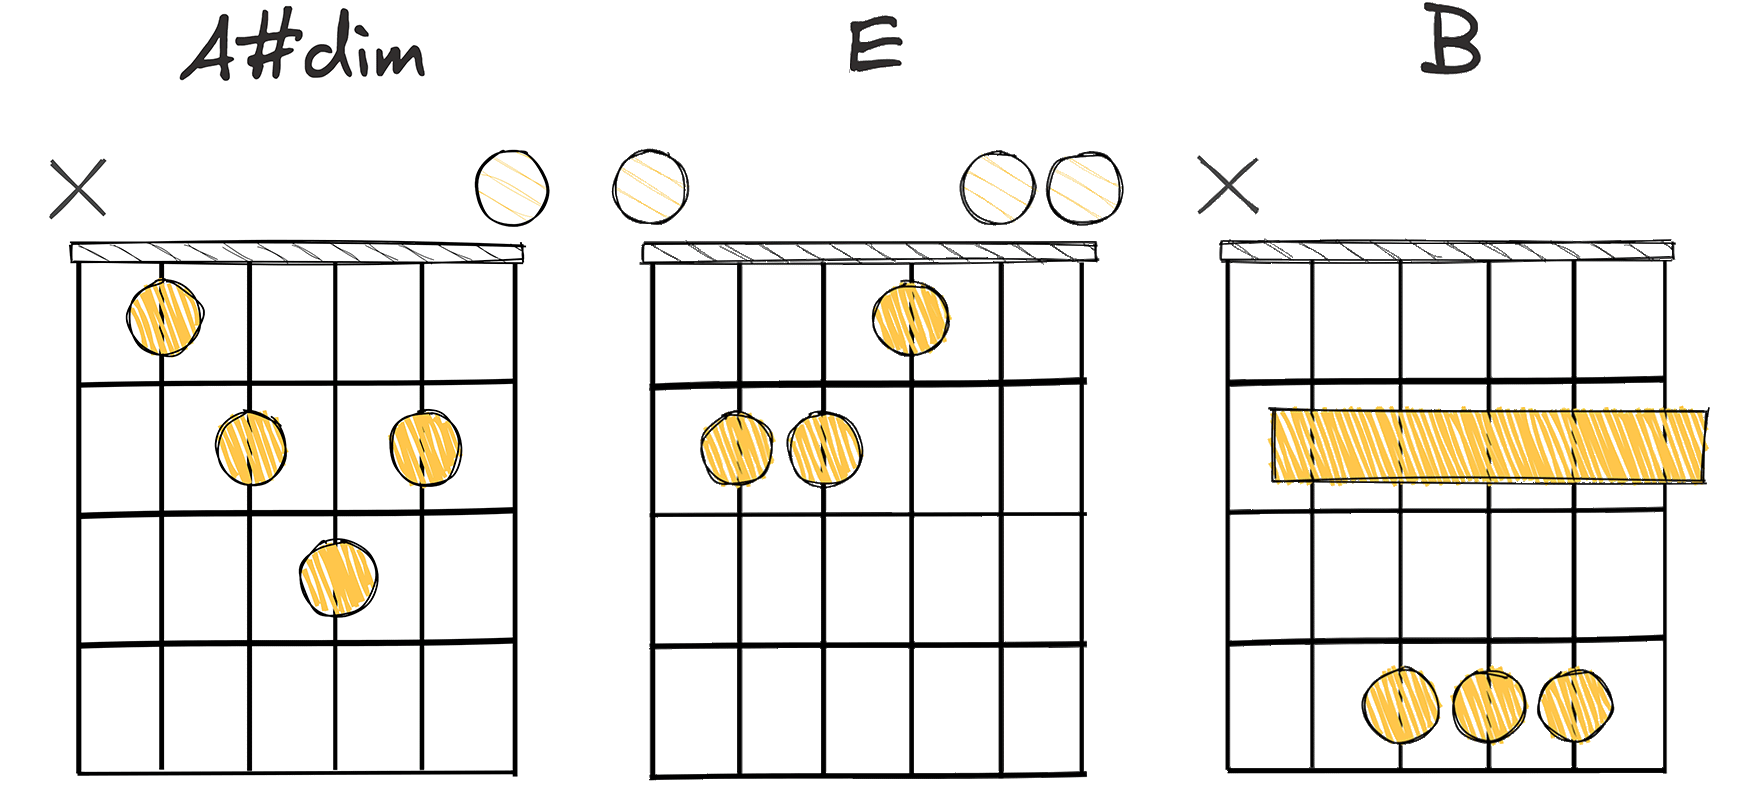 vii°-IV-I (7-4-1) chords diagram